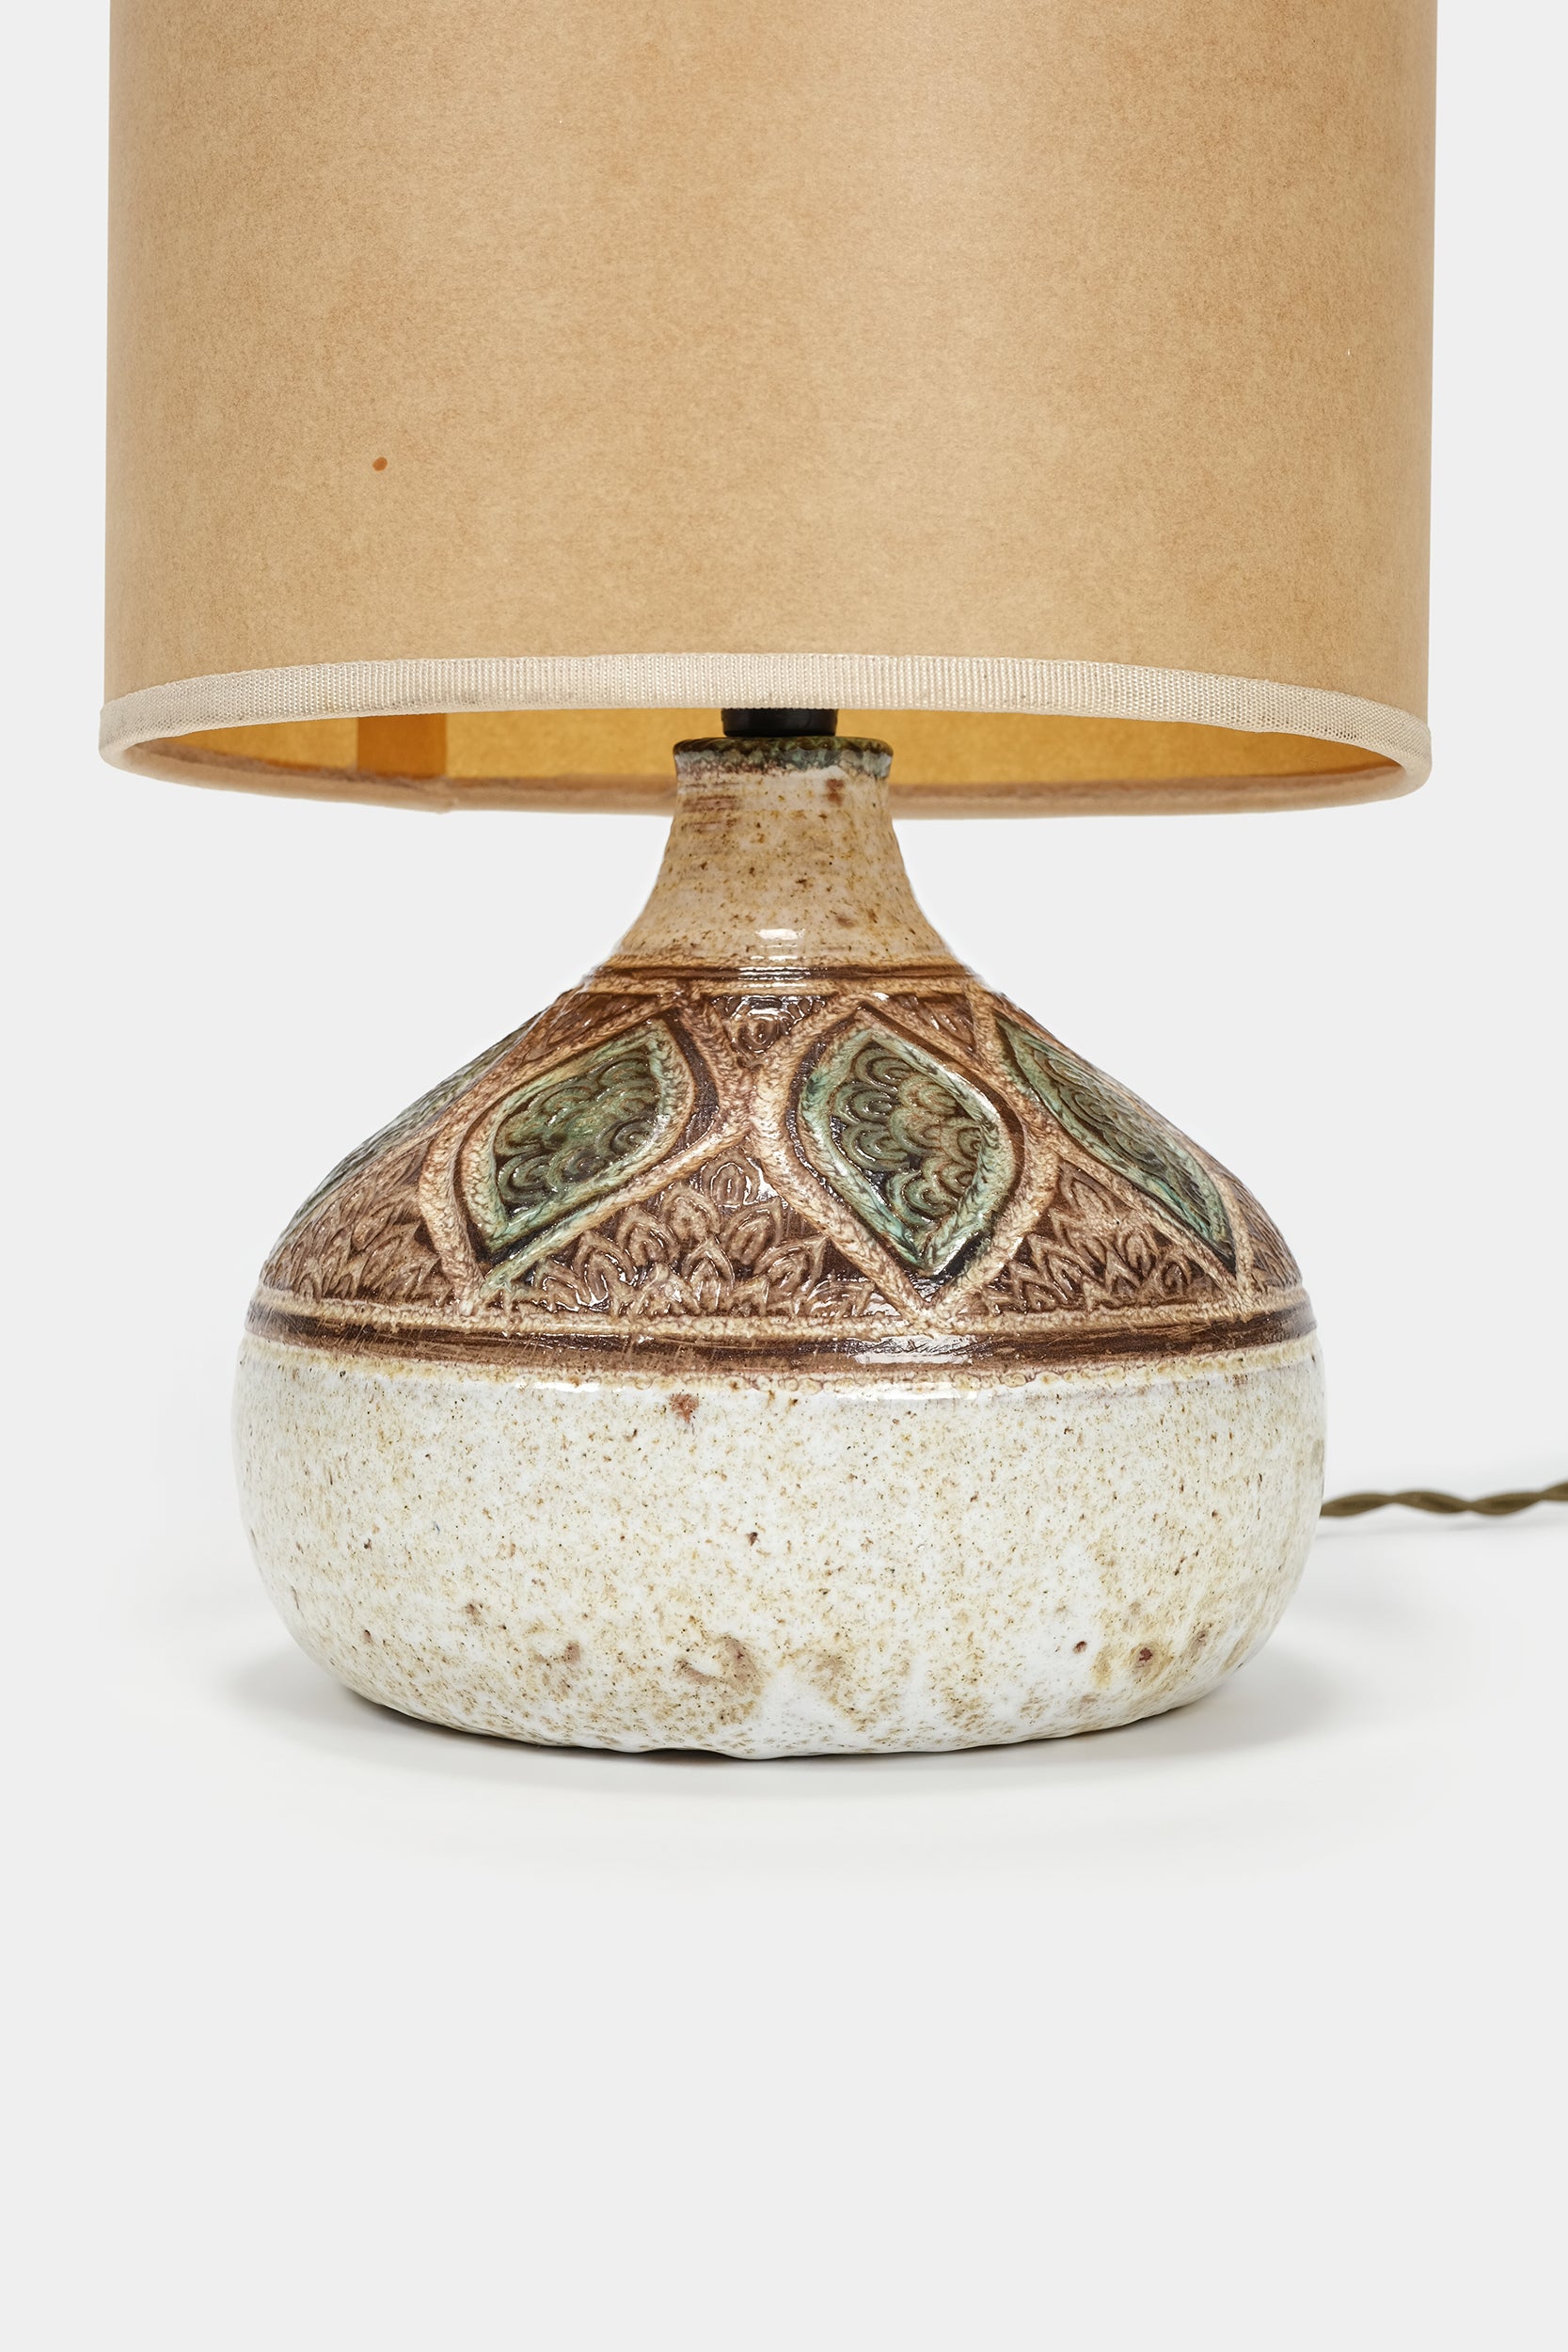 Marcel Giraud, Ceramic Lamp, Vallauris, France, 60s